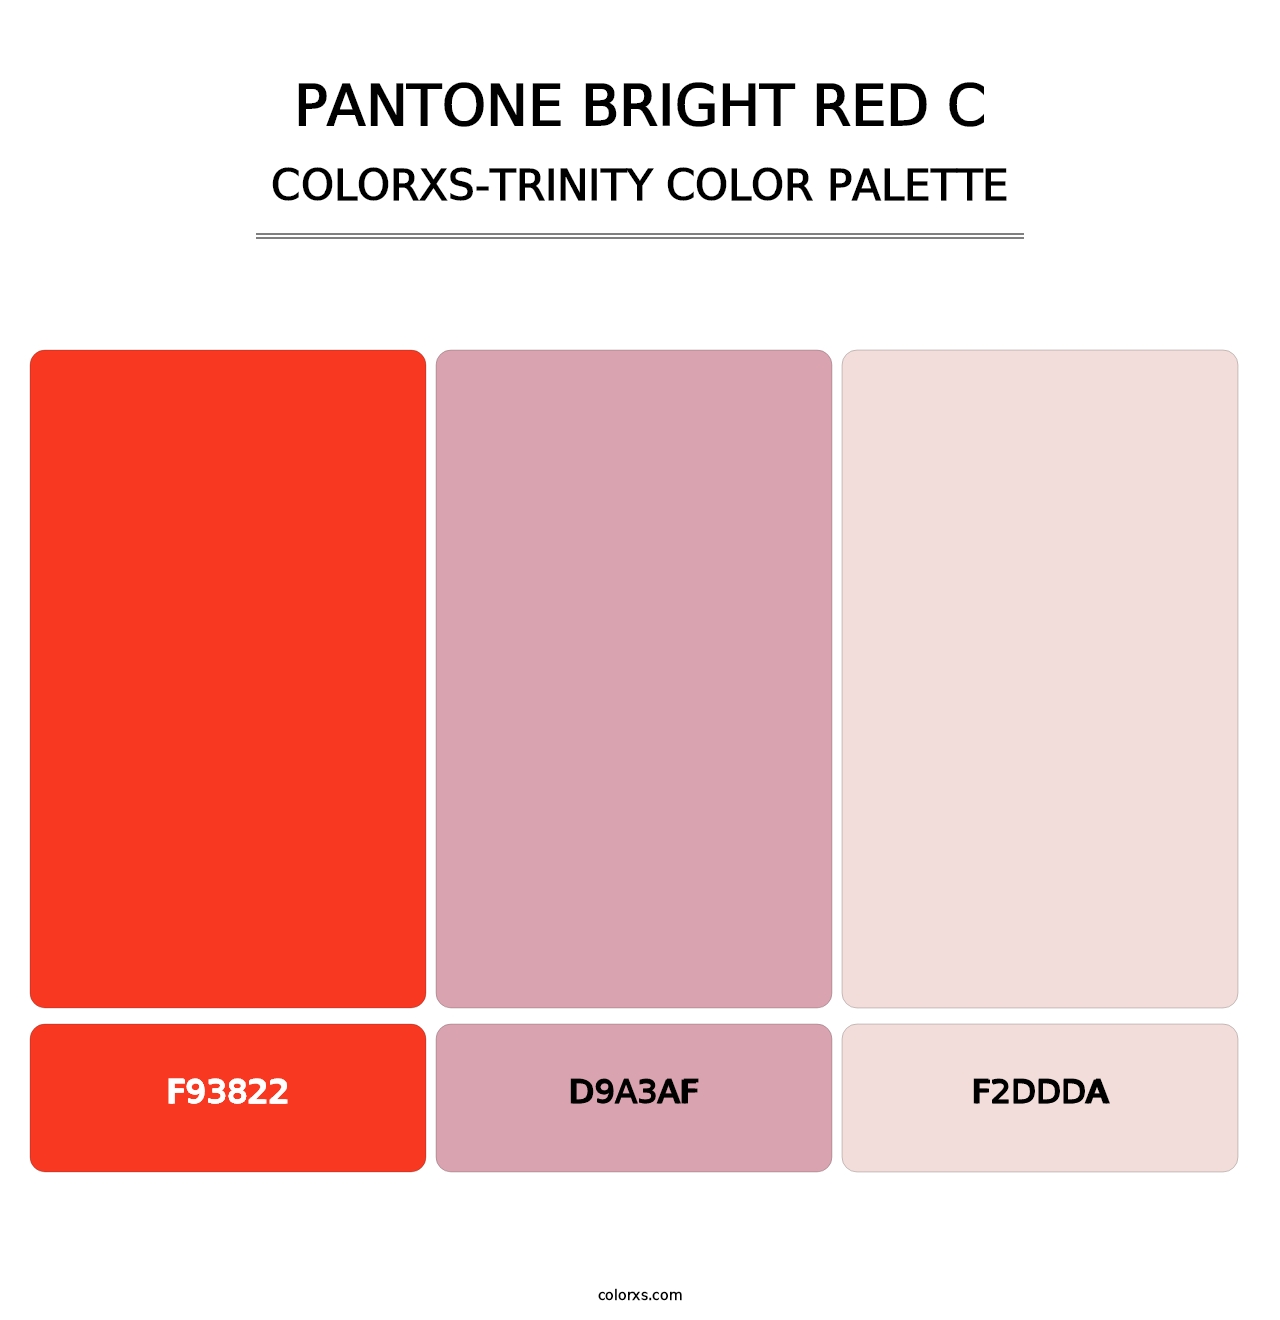 PANTONE Bright Red C - Colorxs Trinity Palette